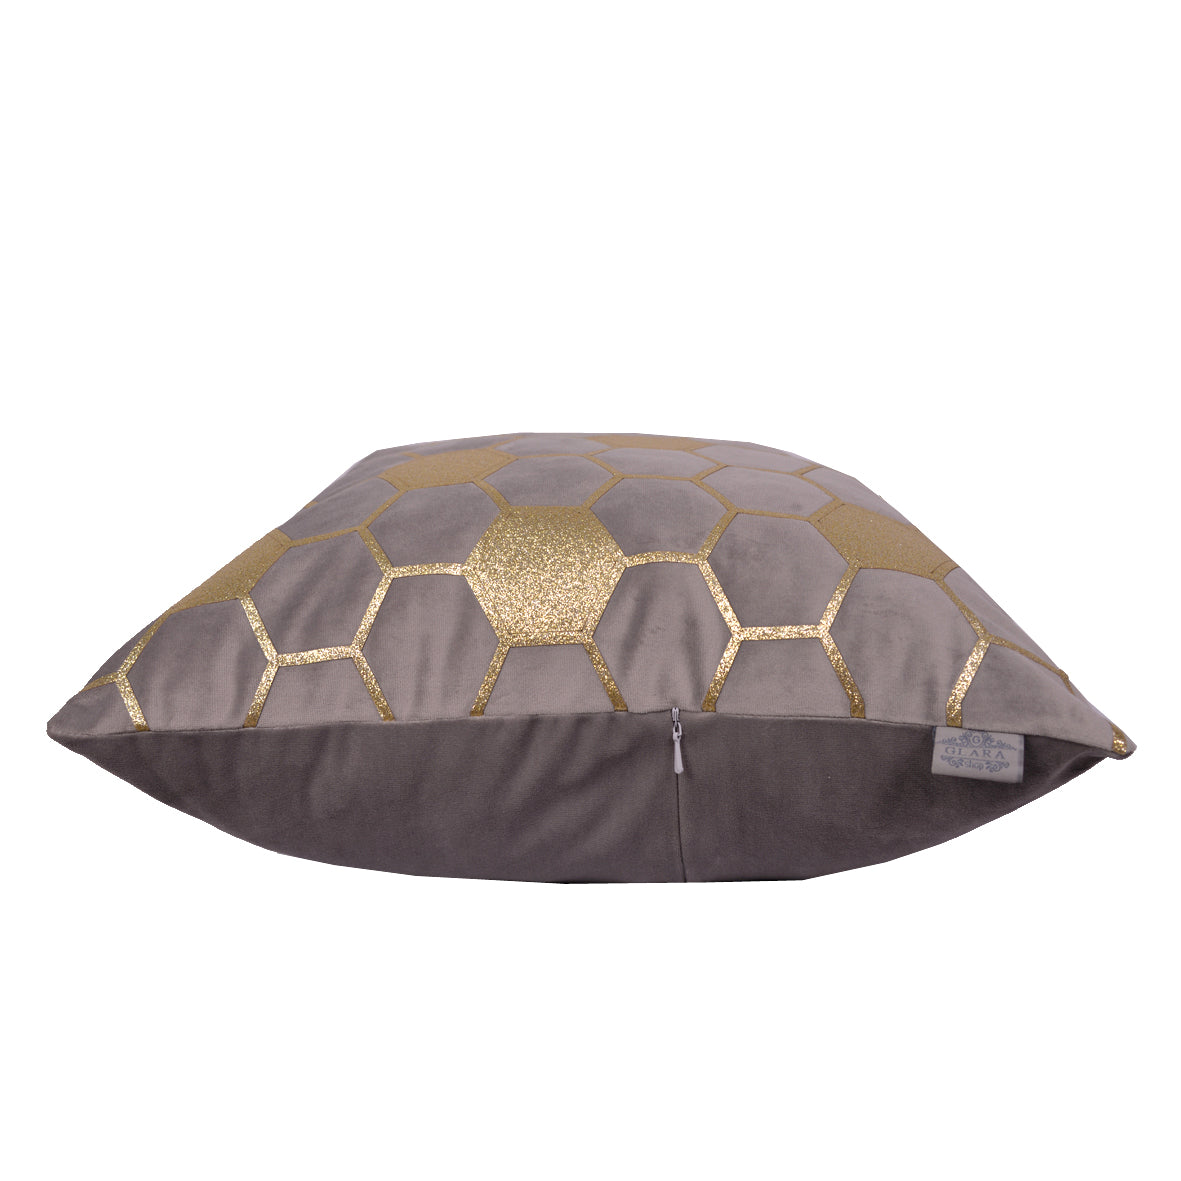 Luxury Velvet Throw Pillow Cover (Grey & Gold Cushion Cover)